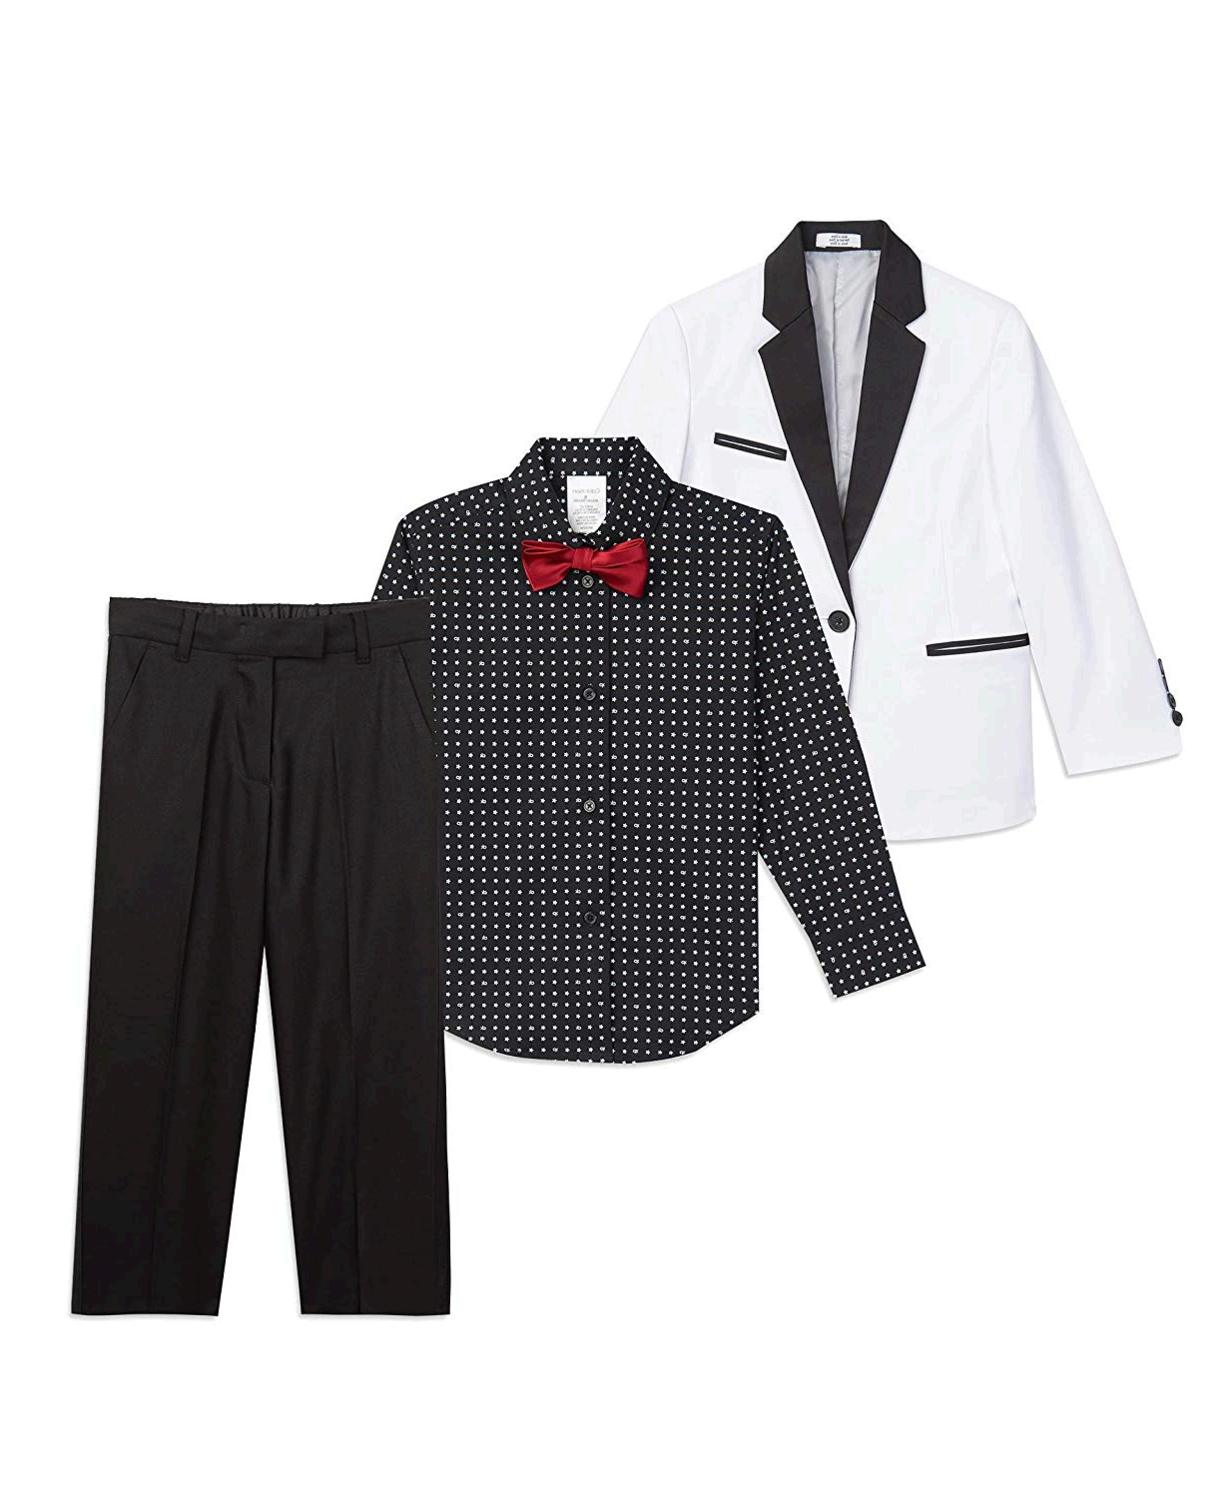 Calvin Klein Boys' Toddler 4-Piece Formal Suit Set, Multi, Multi Black